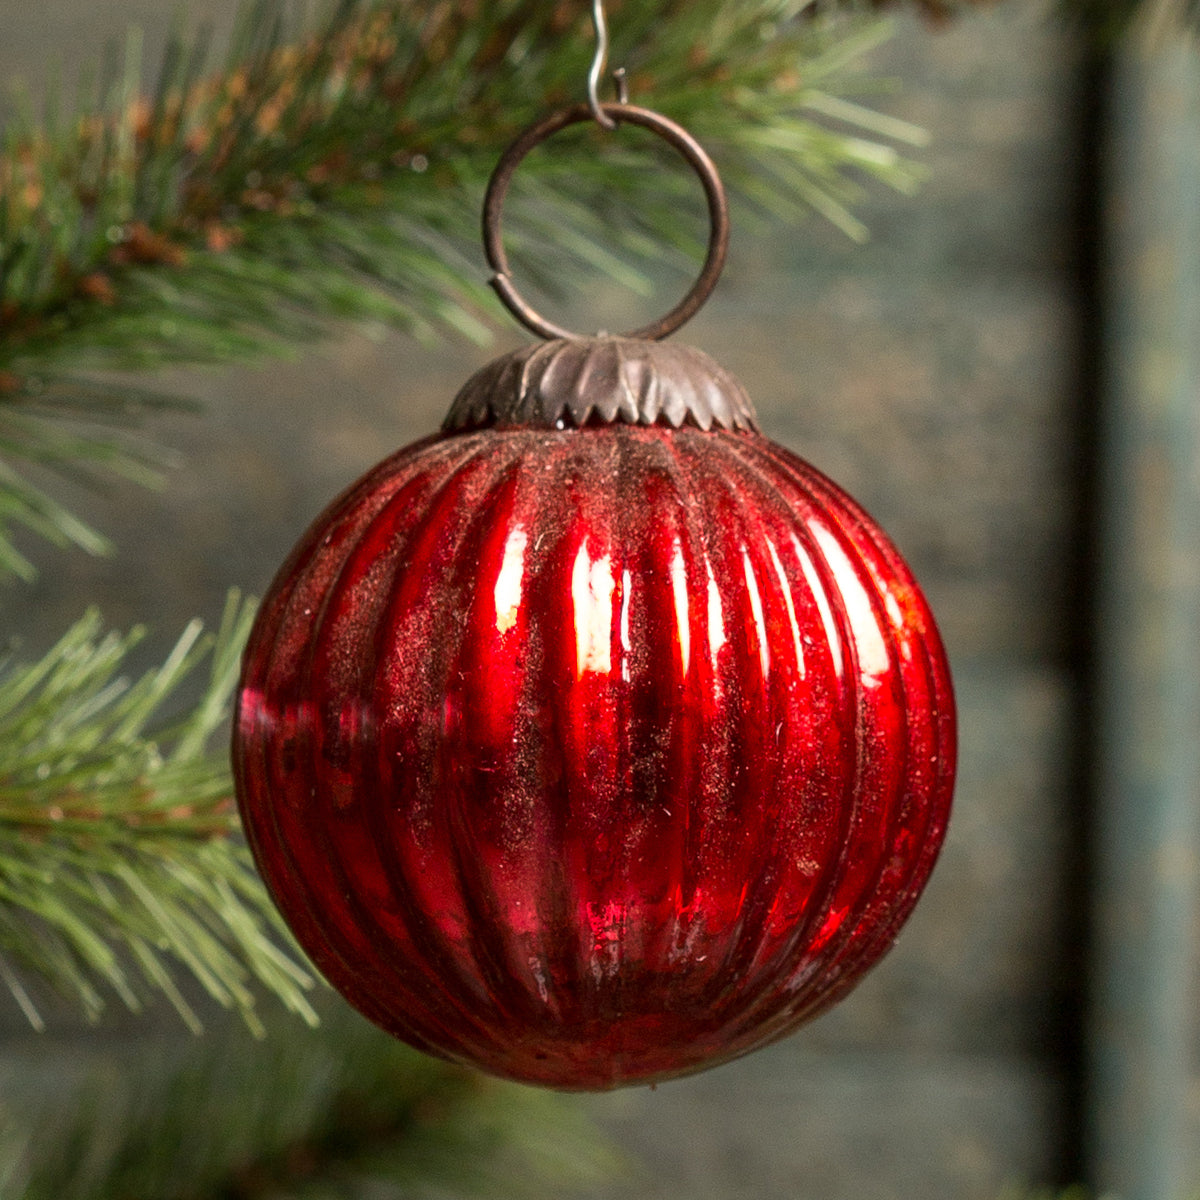 Dark Red Heart Mercury Glass Christmas Ornament